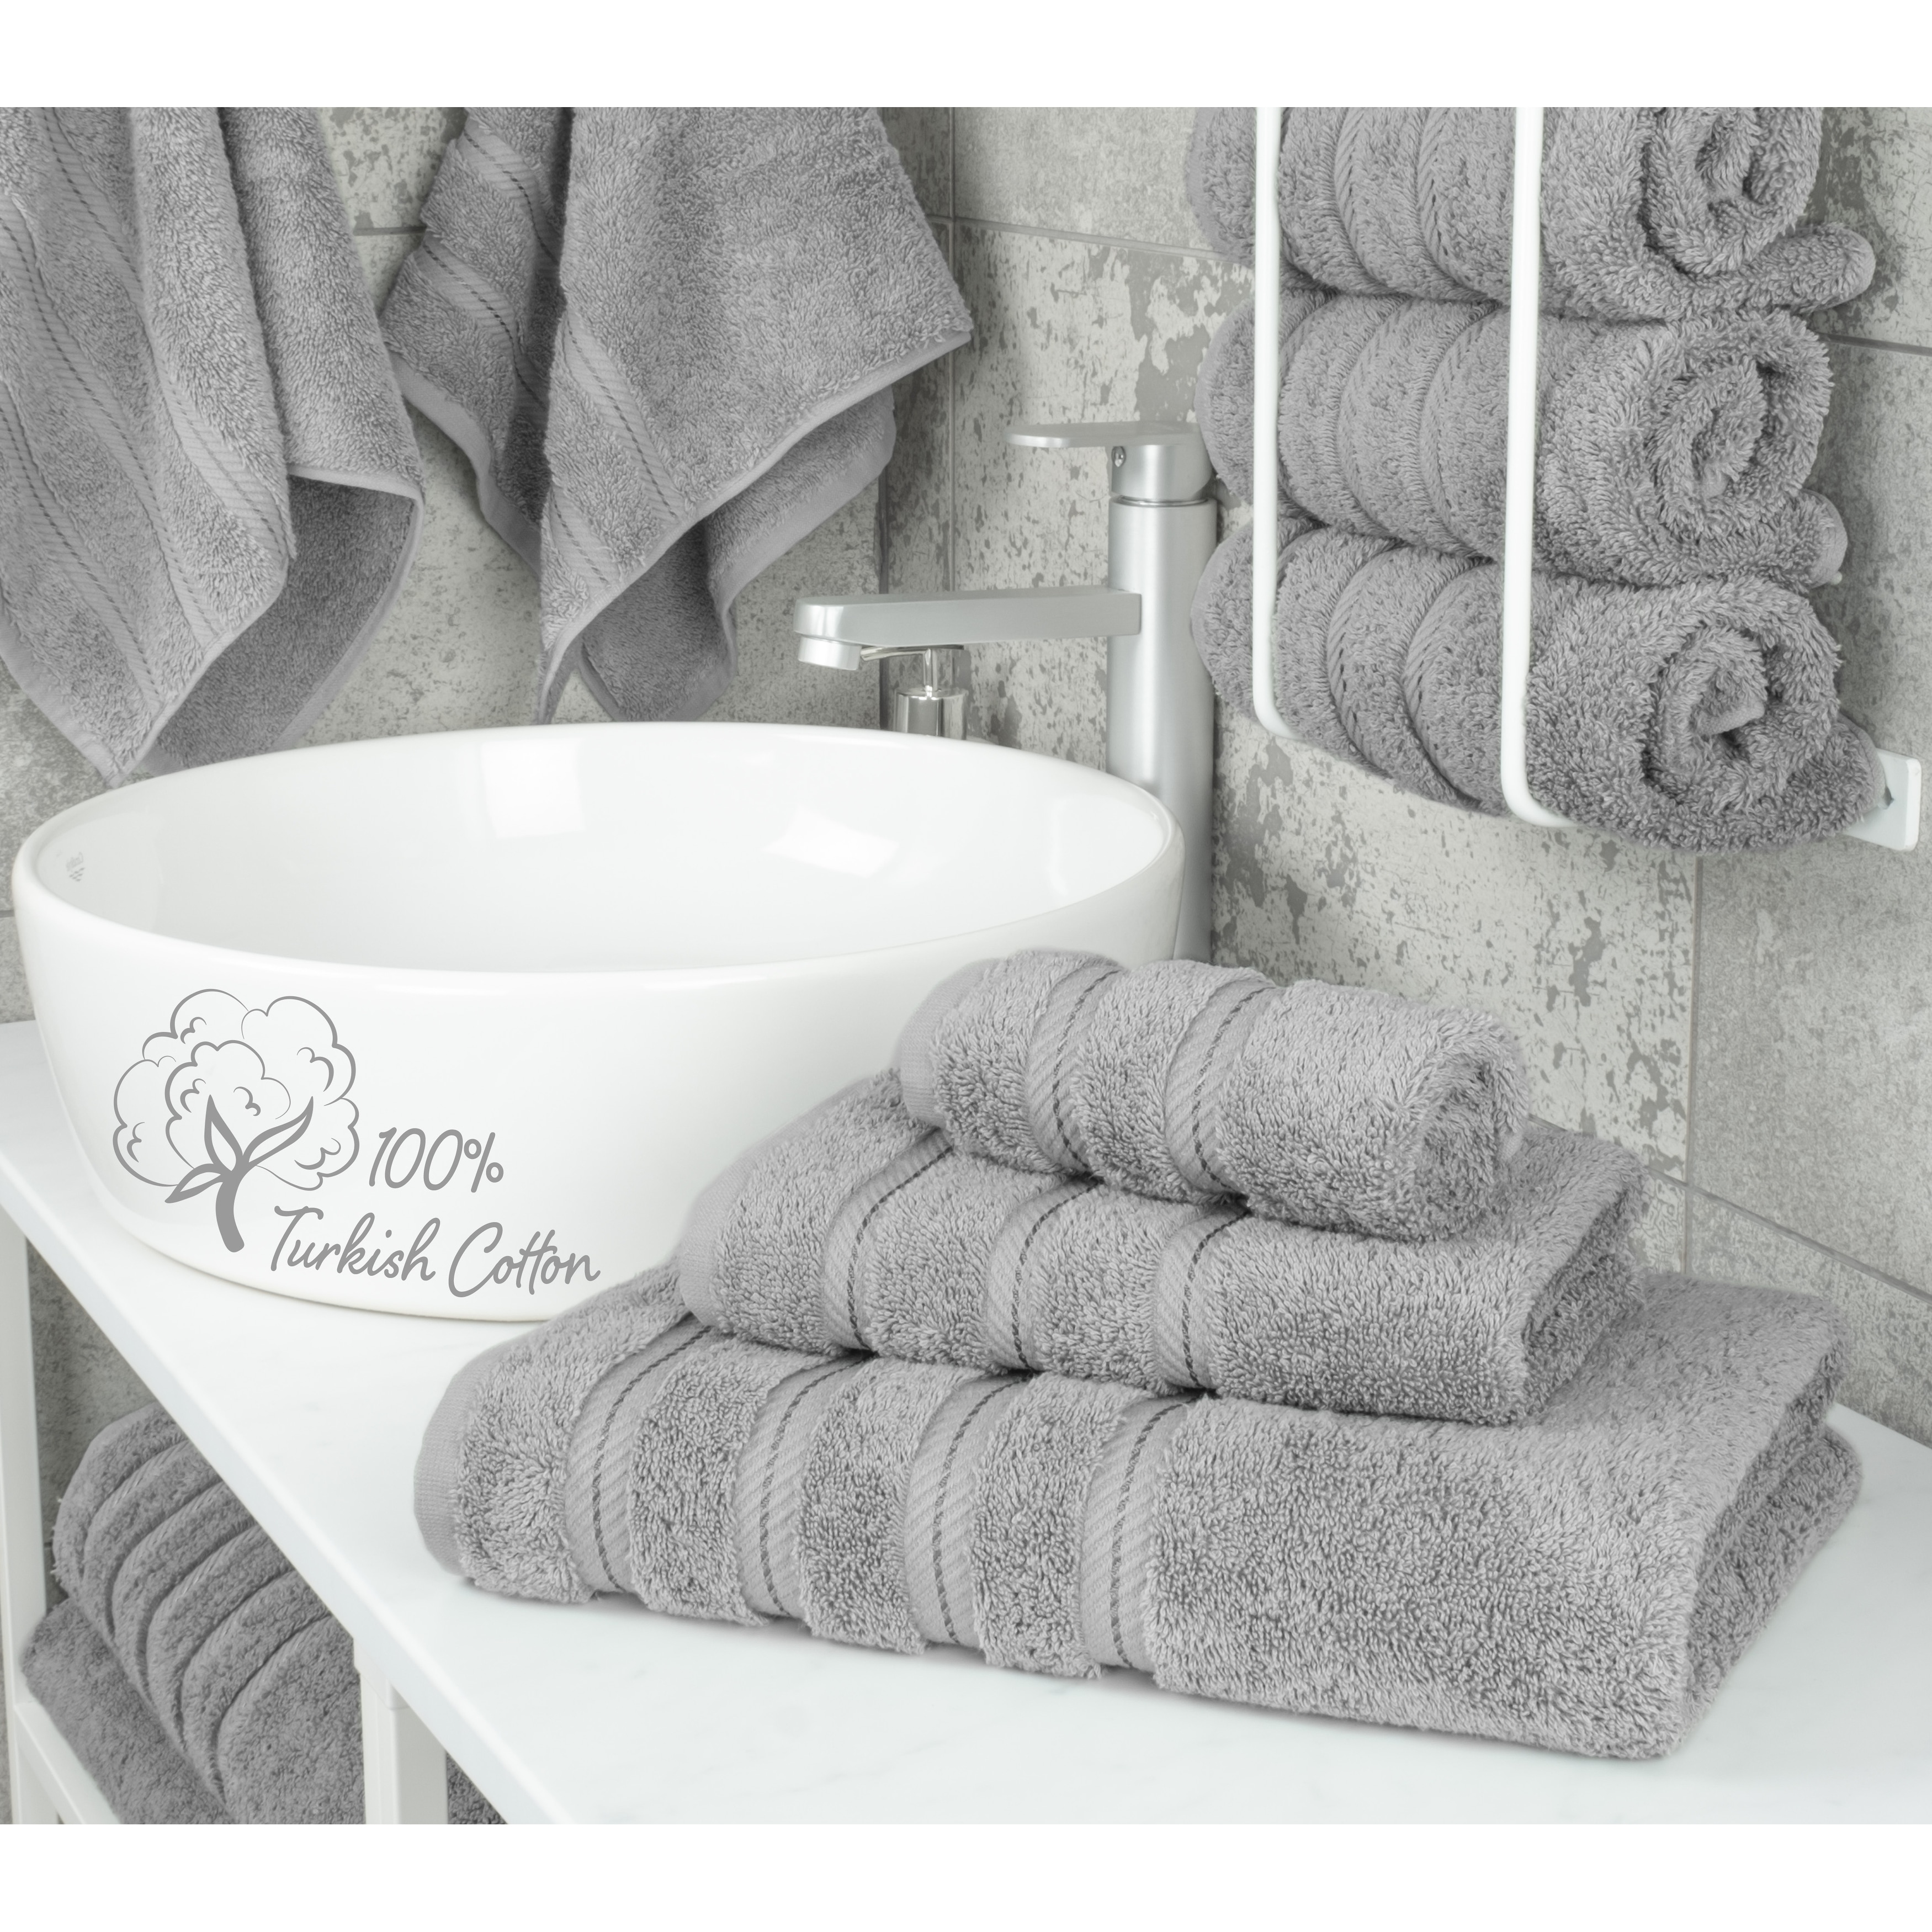 https://ak1.ostkcdn.com/images/products/is/images/direct/8e0daae21b88b0bc73d54c2bd6daf01e22f75bc4/American-Soft-Linen-3-Piece%2C-100%25-Genuine-Turkish-Cotton-Premium-%26-Luxury-Towels-Bathroom-Sets.jpg